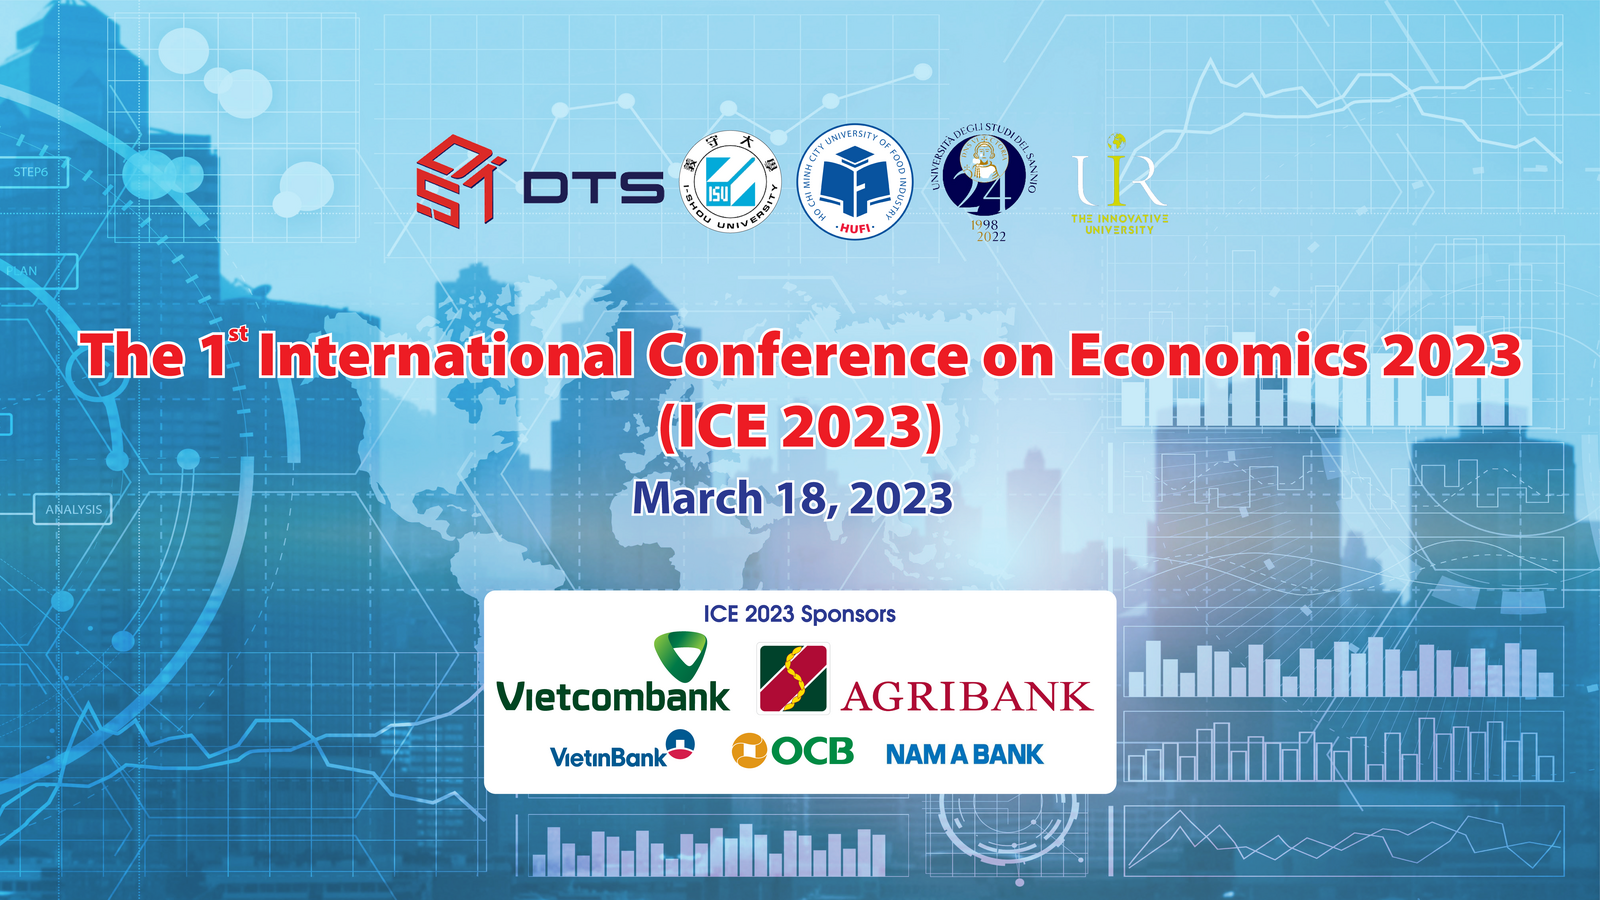 The 1st International Conference on Economics, 2023 (ICE 2023)